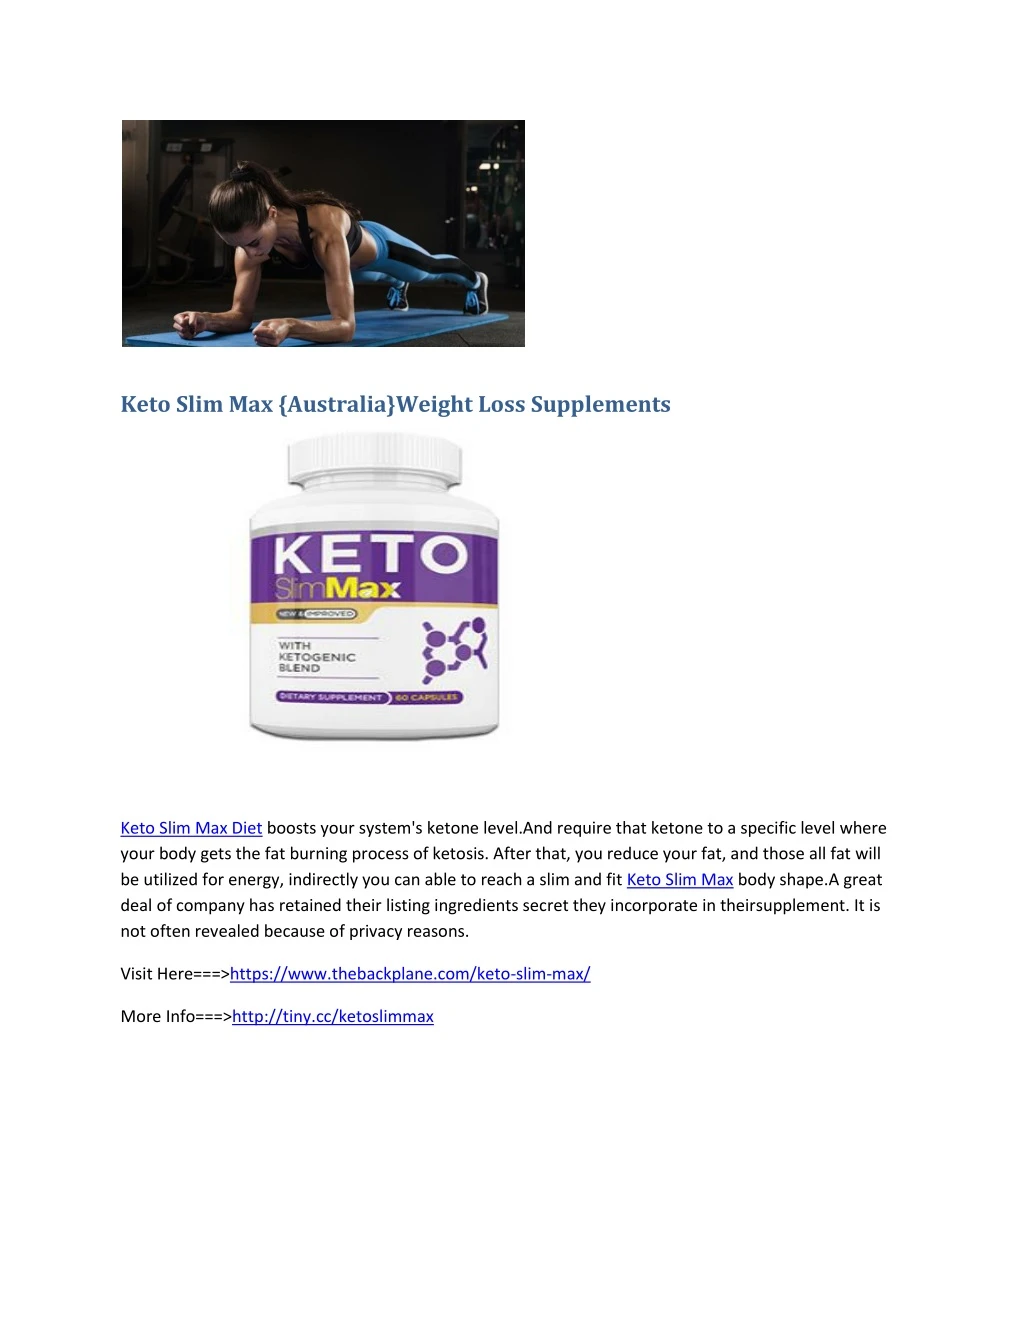 keto slim max australia weight loss supplements